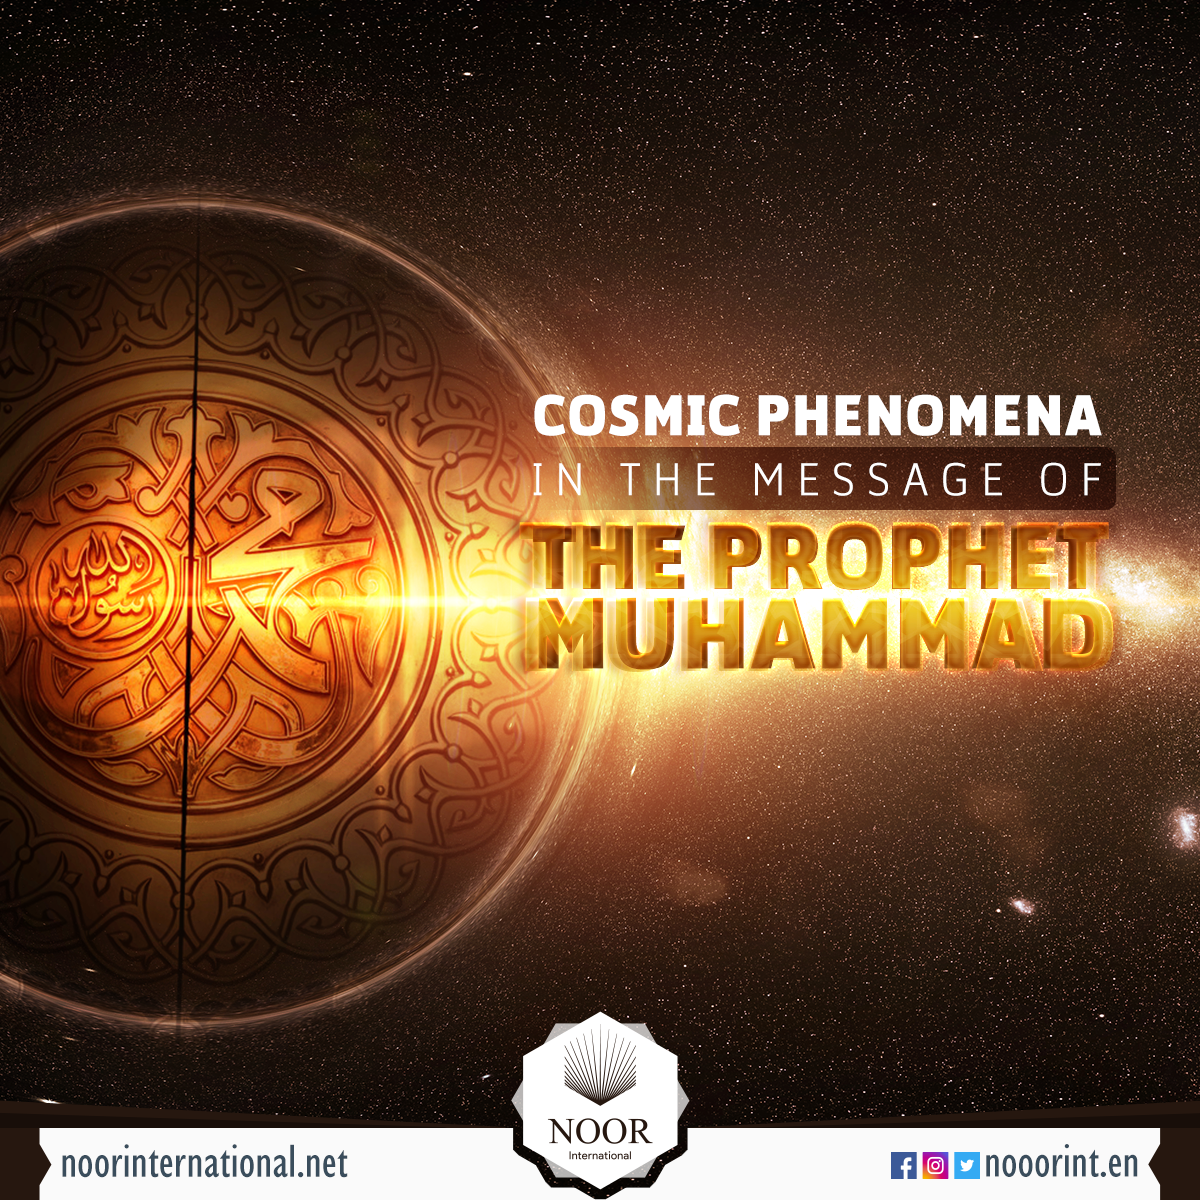 Cosmic phenomena in the message of the Prophet Muhammad